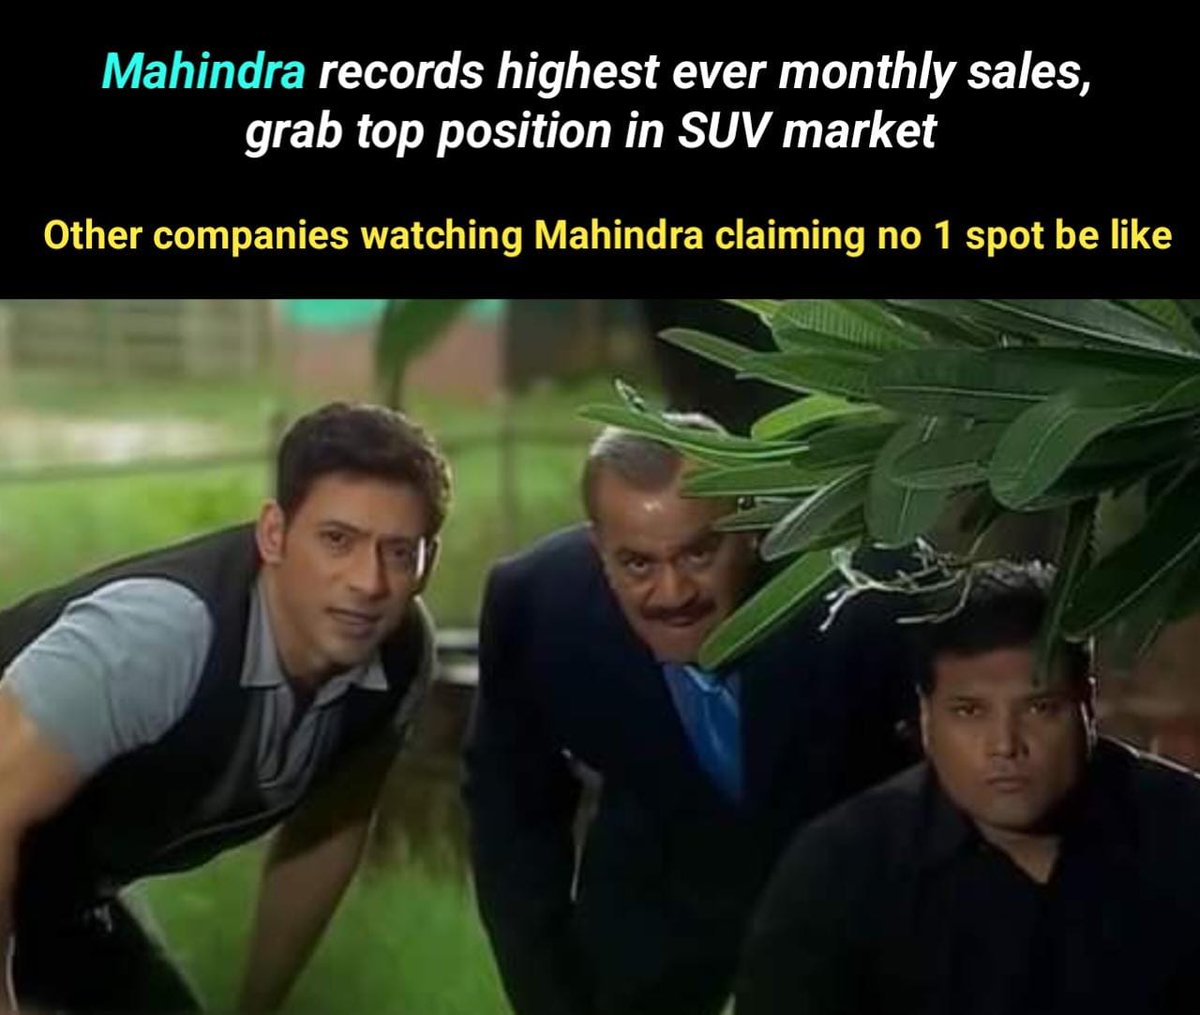 Mahindra has broke the record and now it's at no.1 in SUV #MahindraAuto